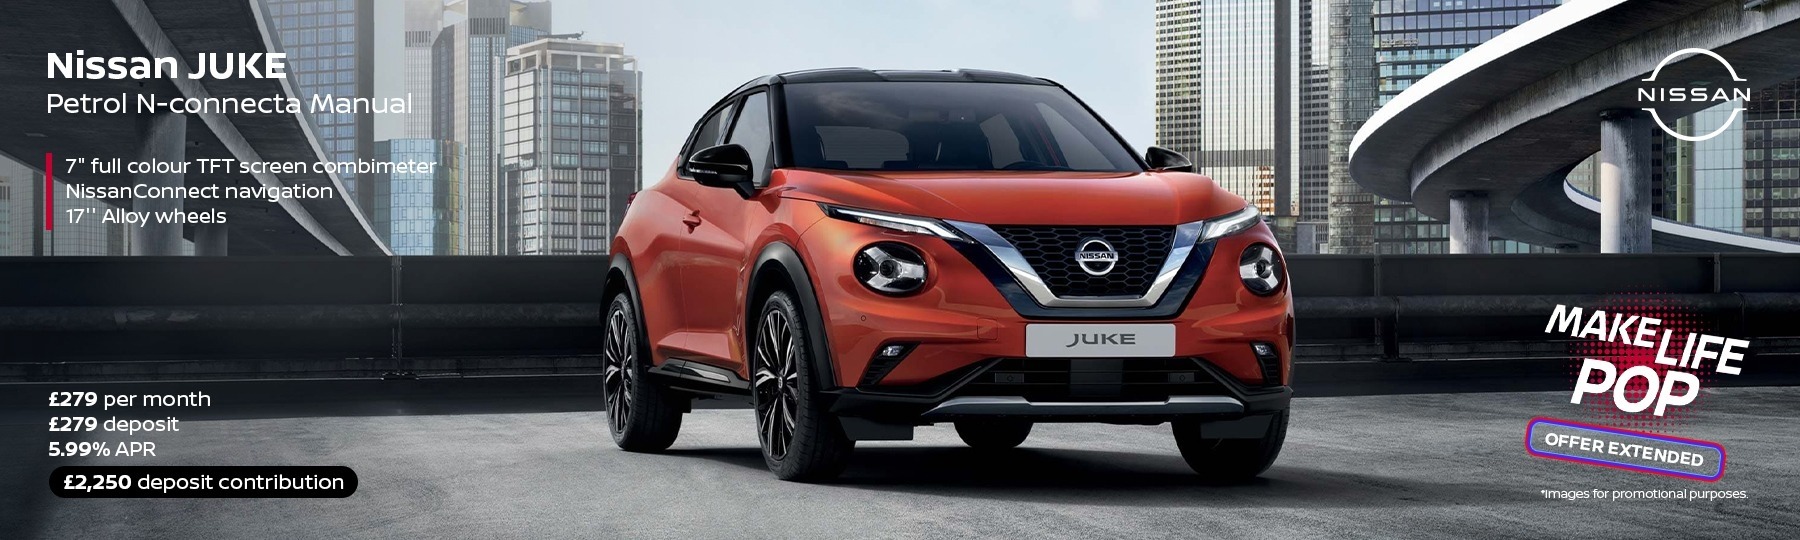 Next Generation Nissan Juke New Car Offer